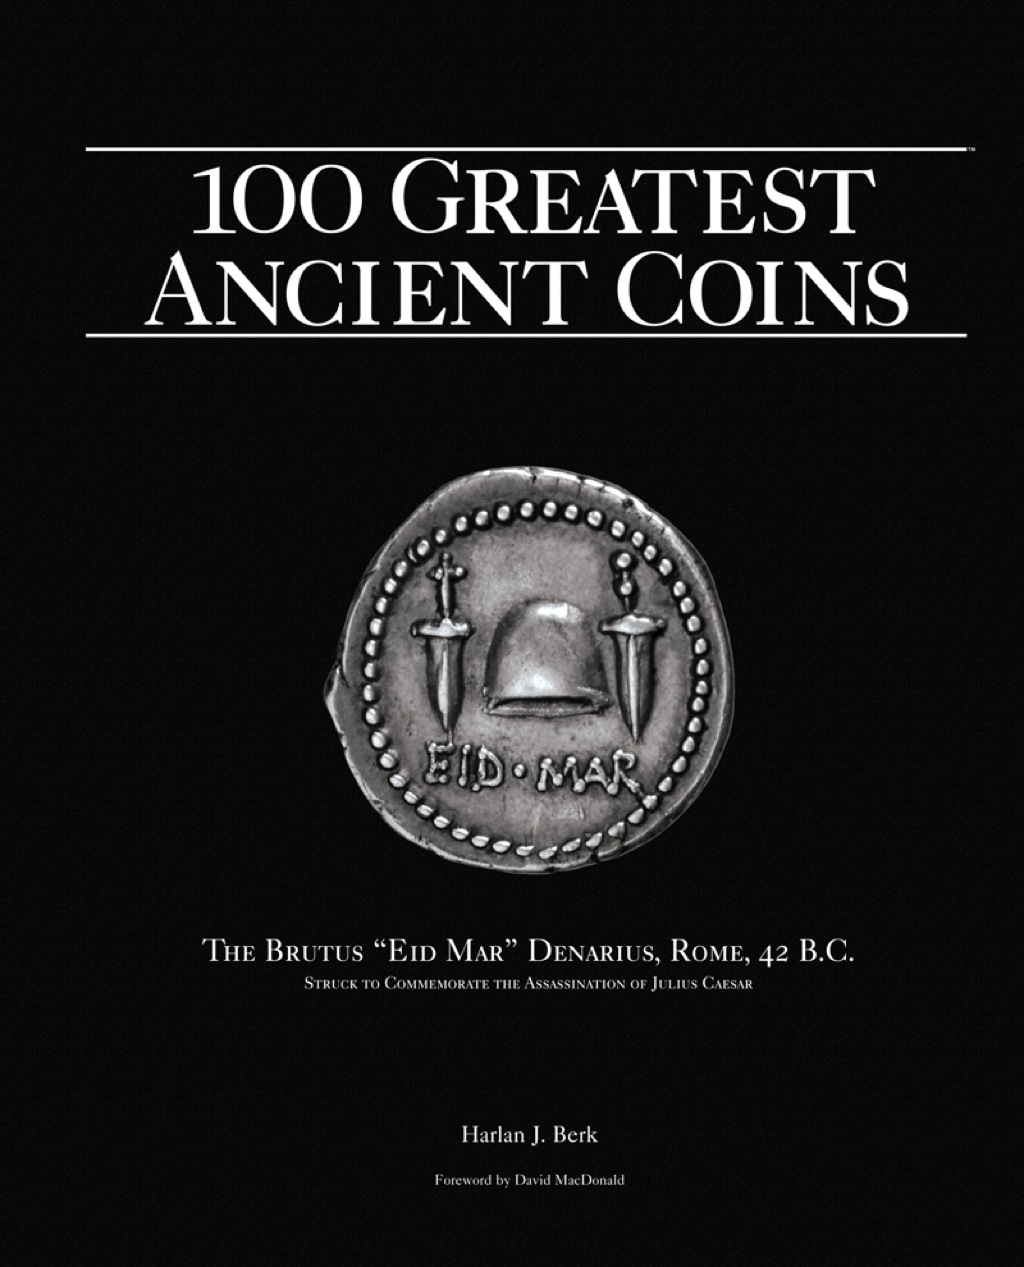 100 Greatest Ancient Coins (eBook) - Harlan J. Berk,